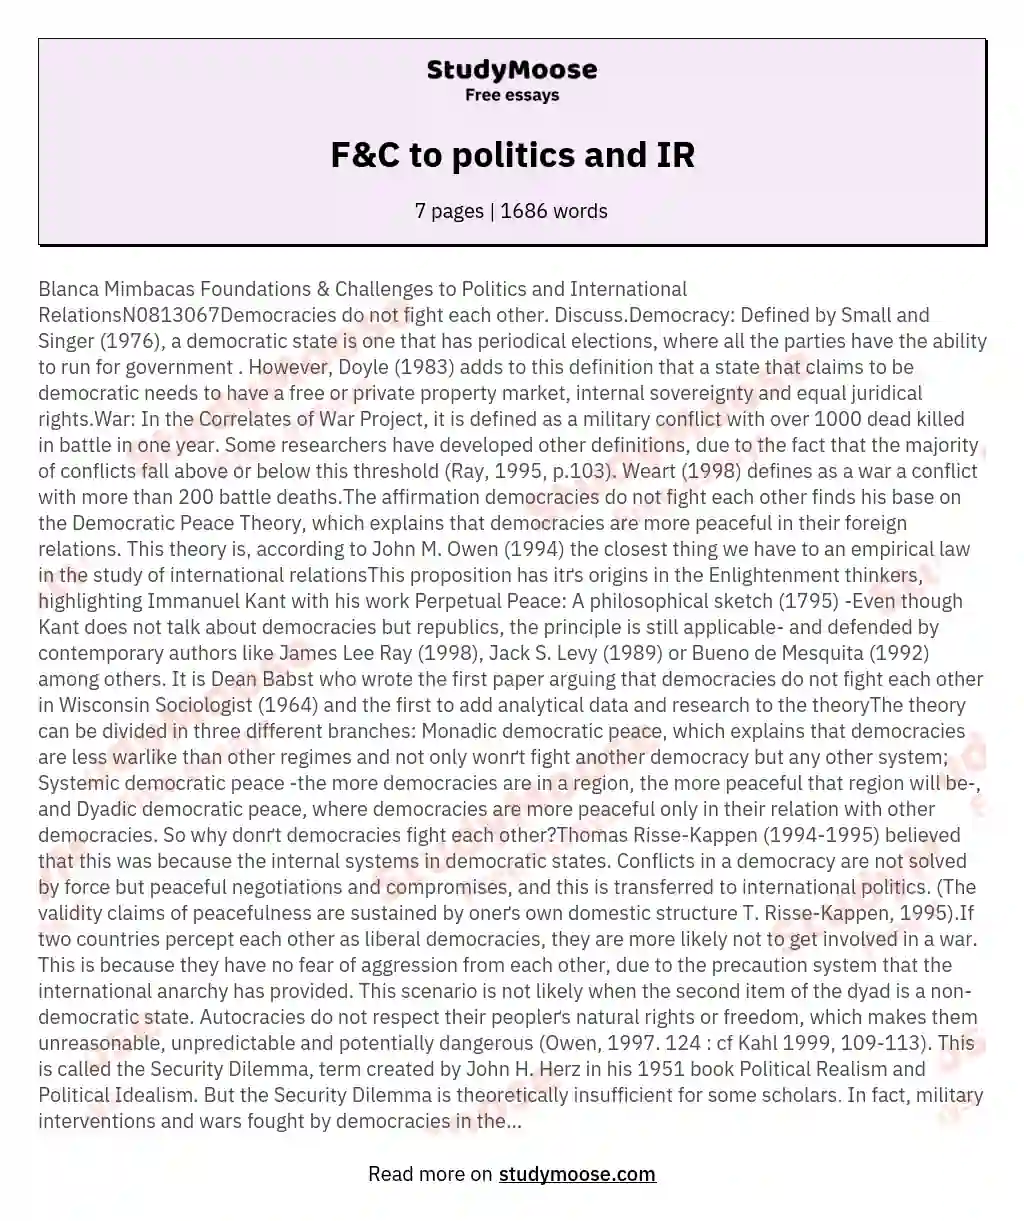 F&C to politics and IR essay